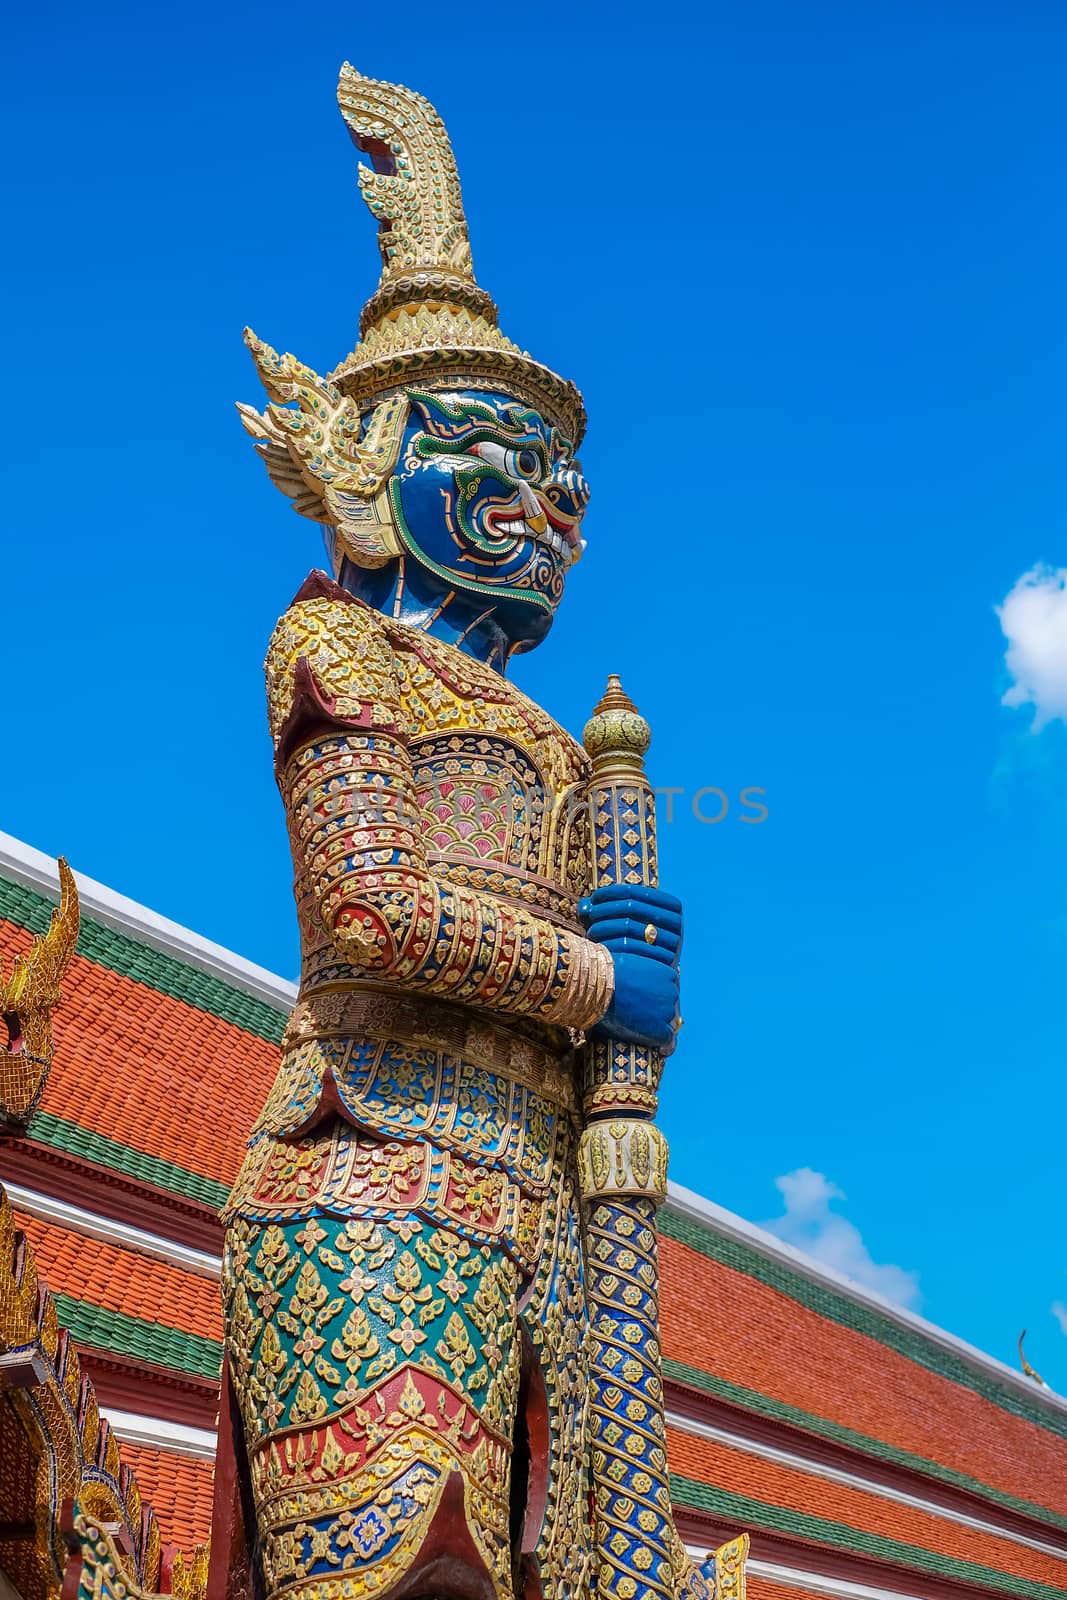 Blue Giant in Thailand on Blue sky by Surasak